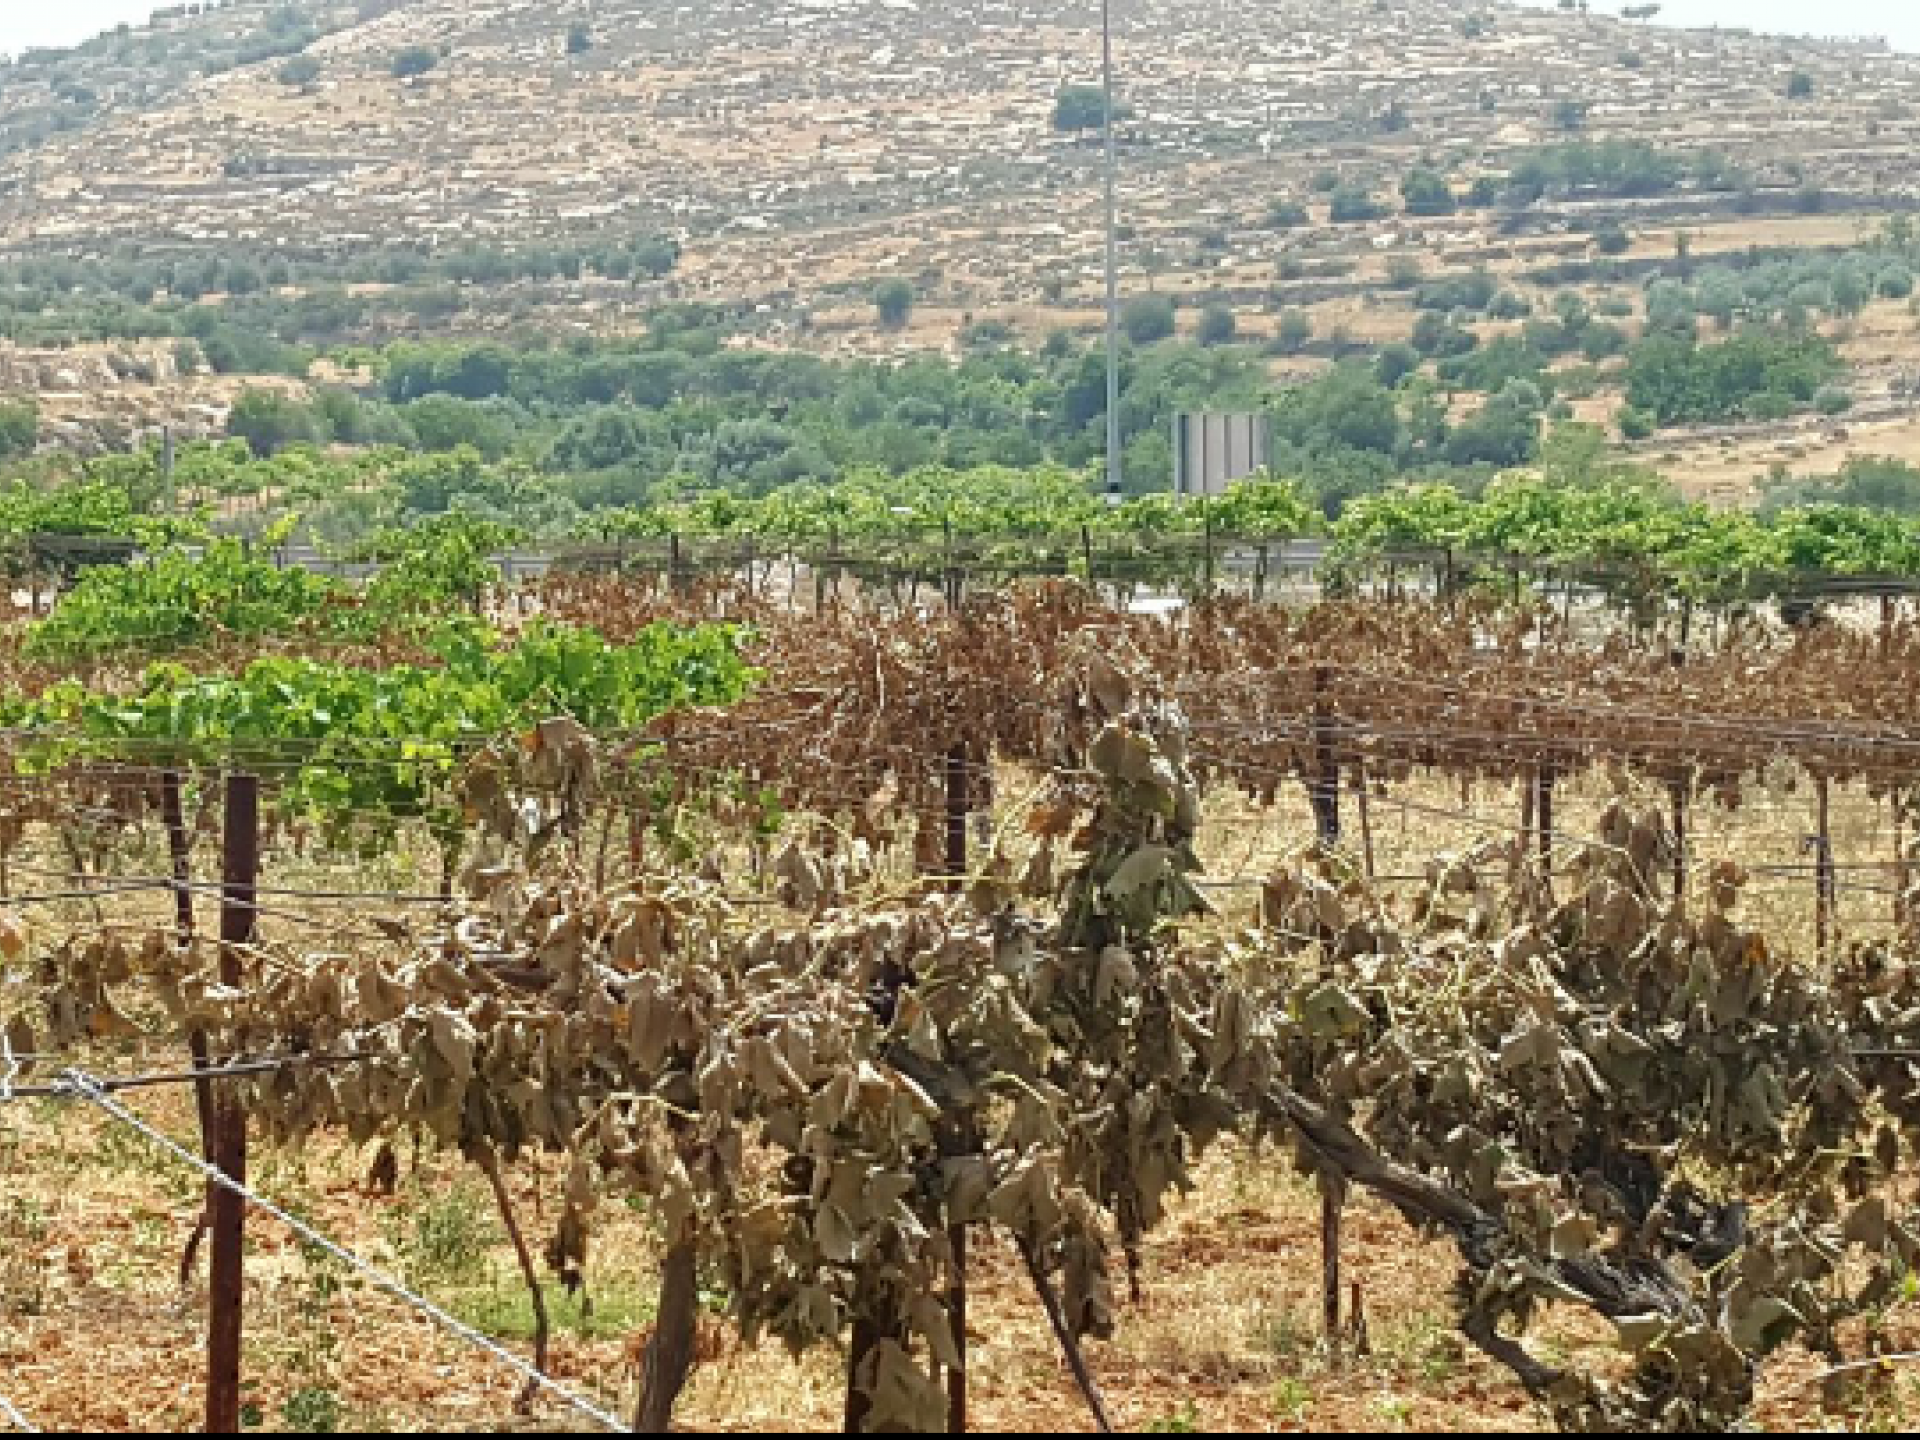 The mutilated vineyard